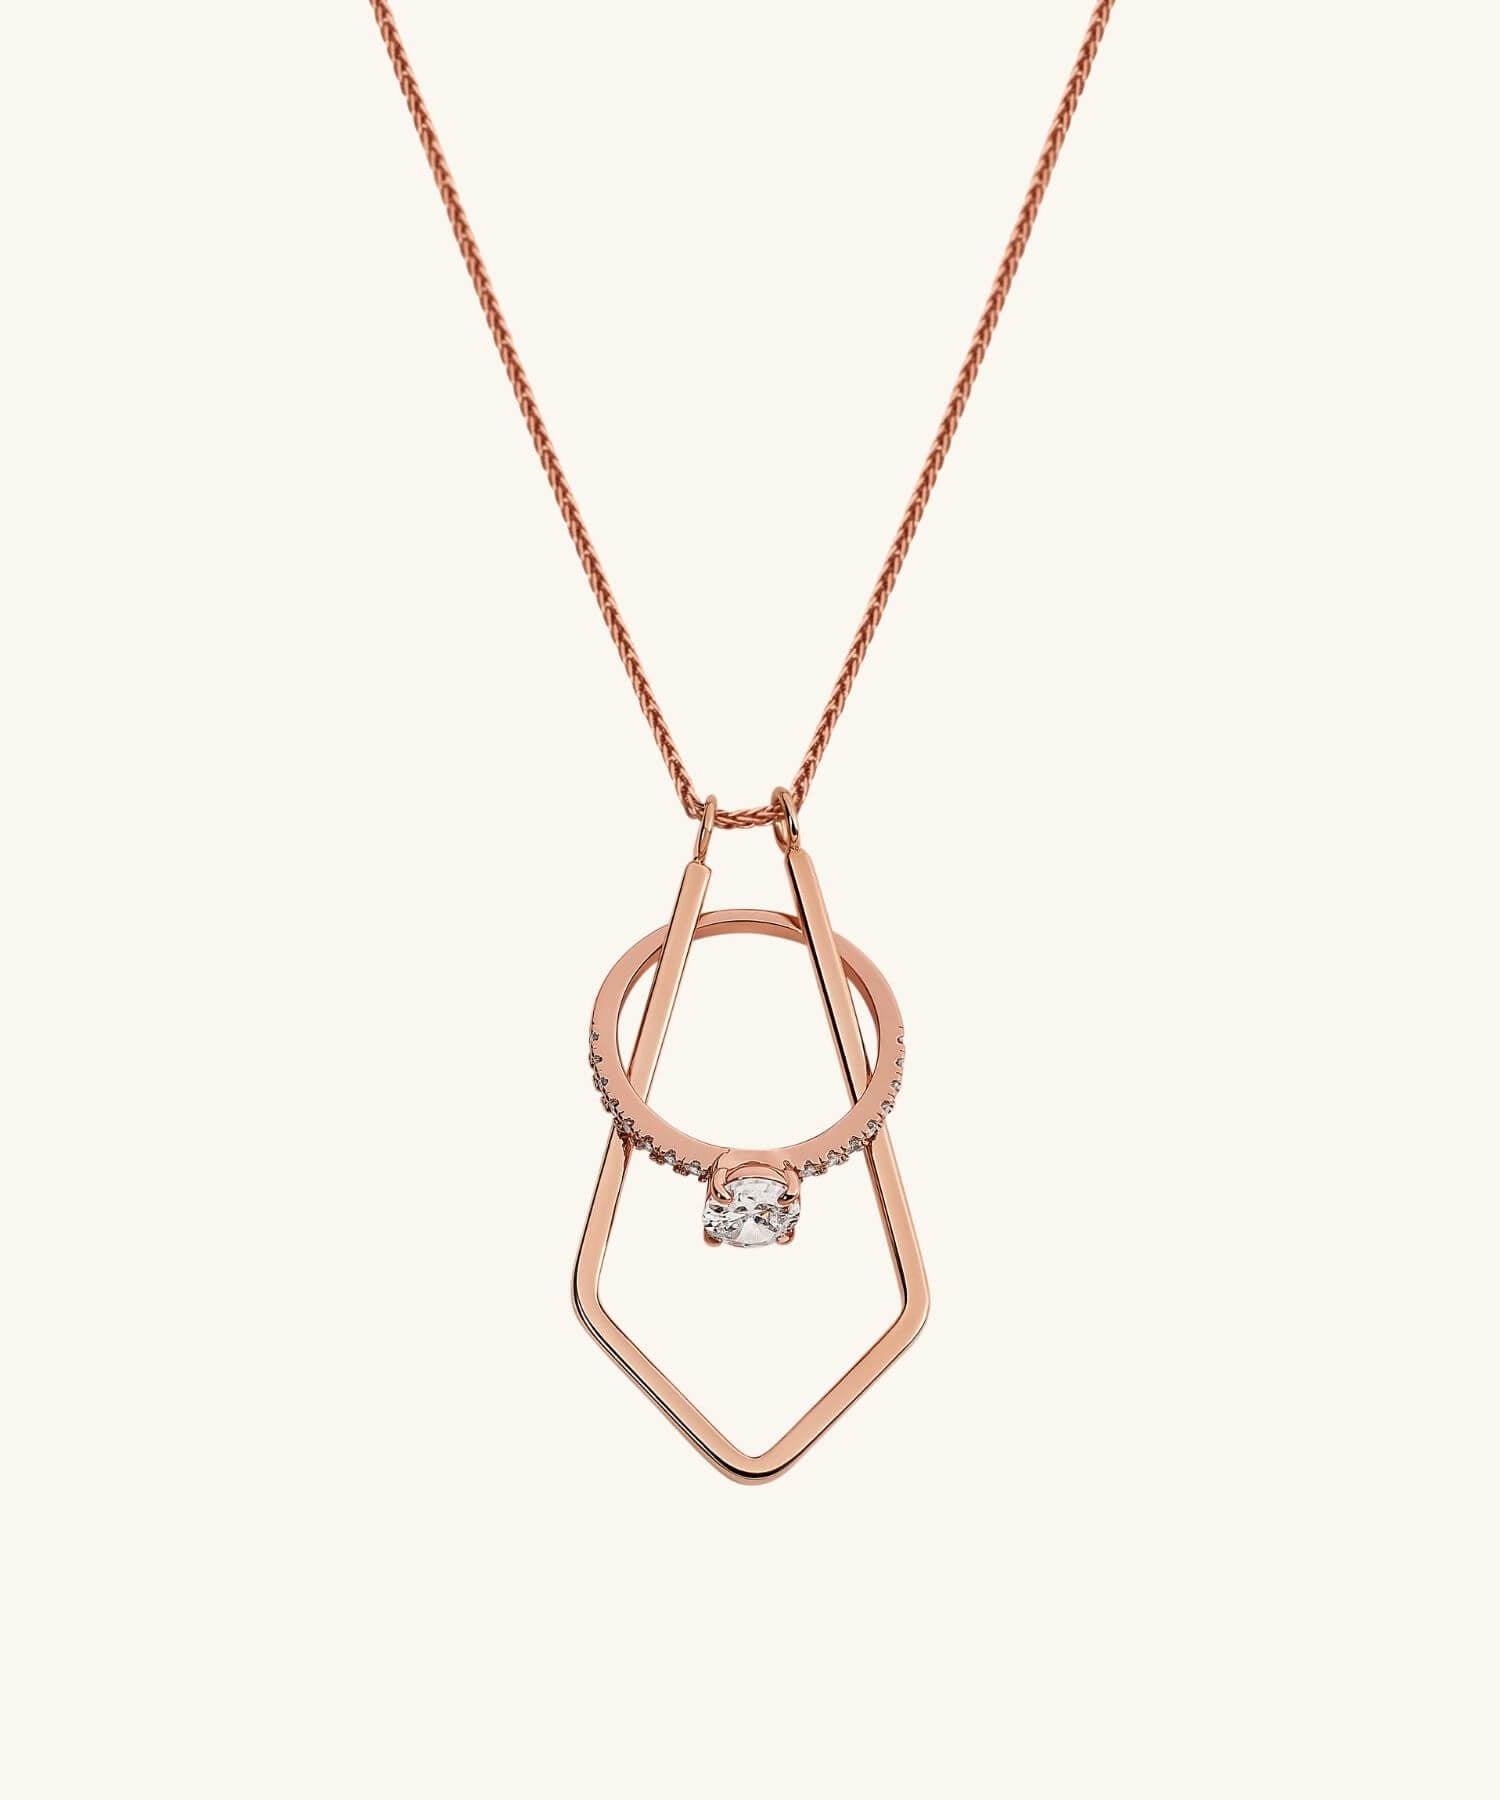 Ring Holder Gold Pendant Necklace | sillyshinydiamonds